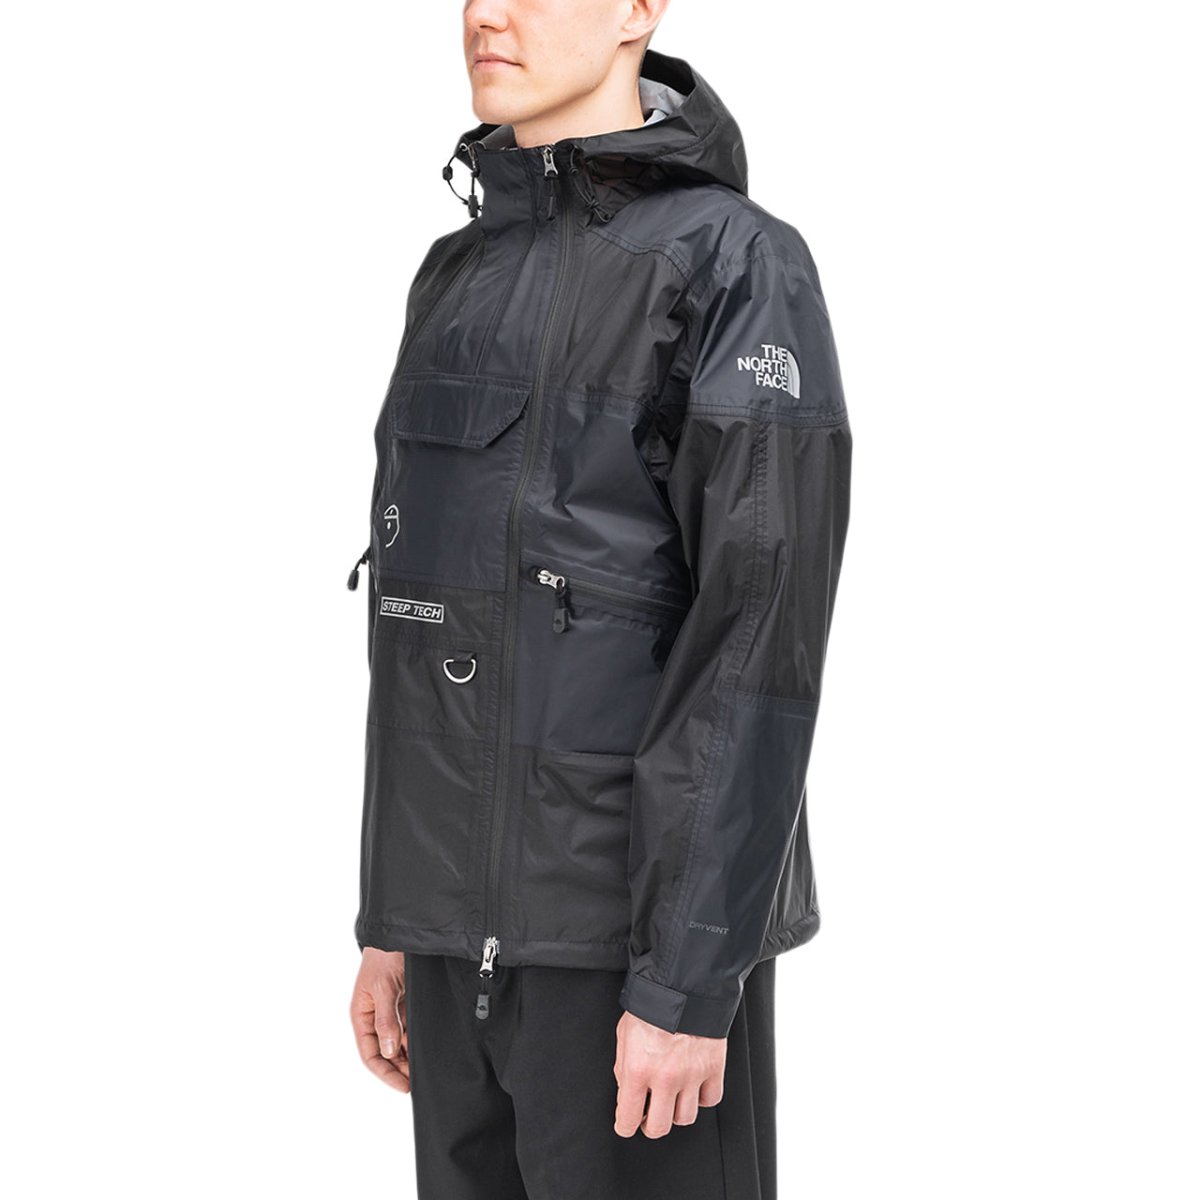 The North Face Steep Tech Light Rain Jacket (Black)